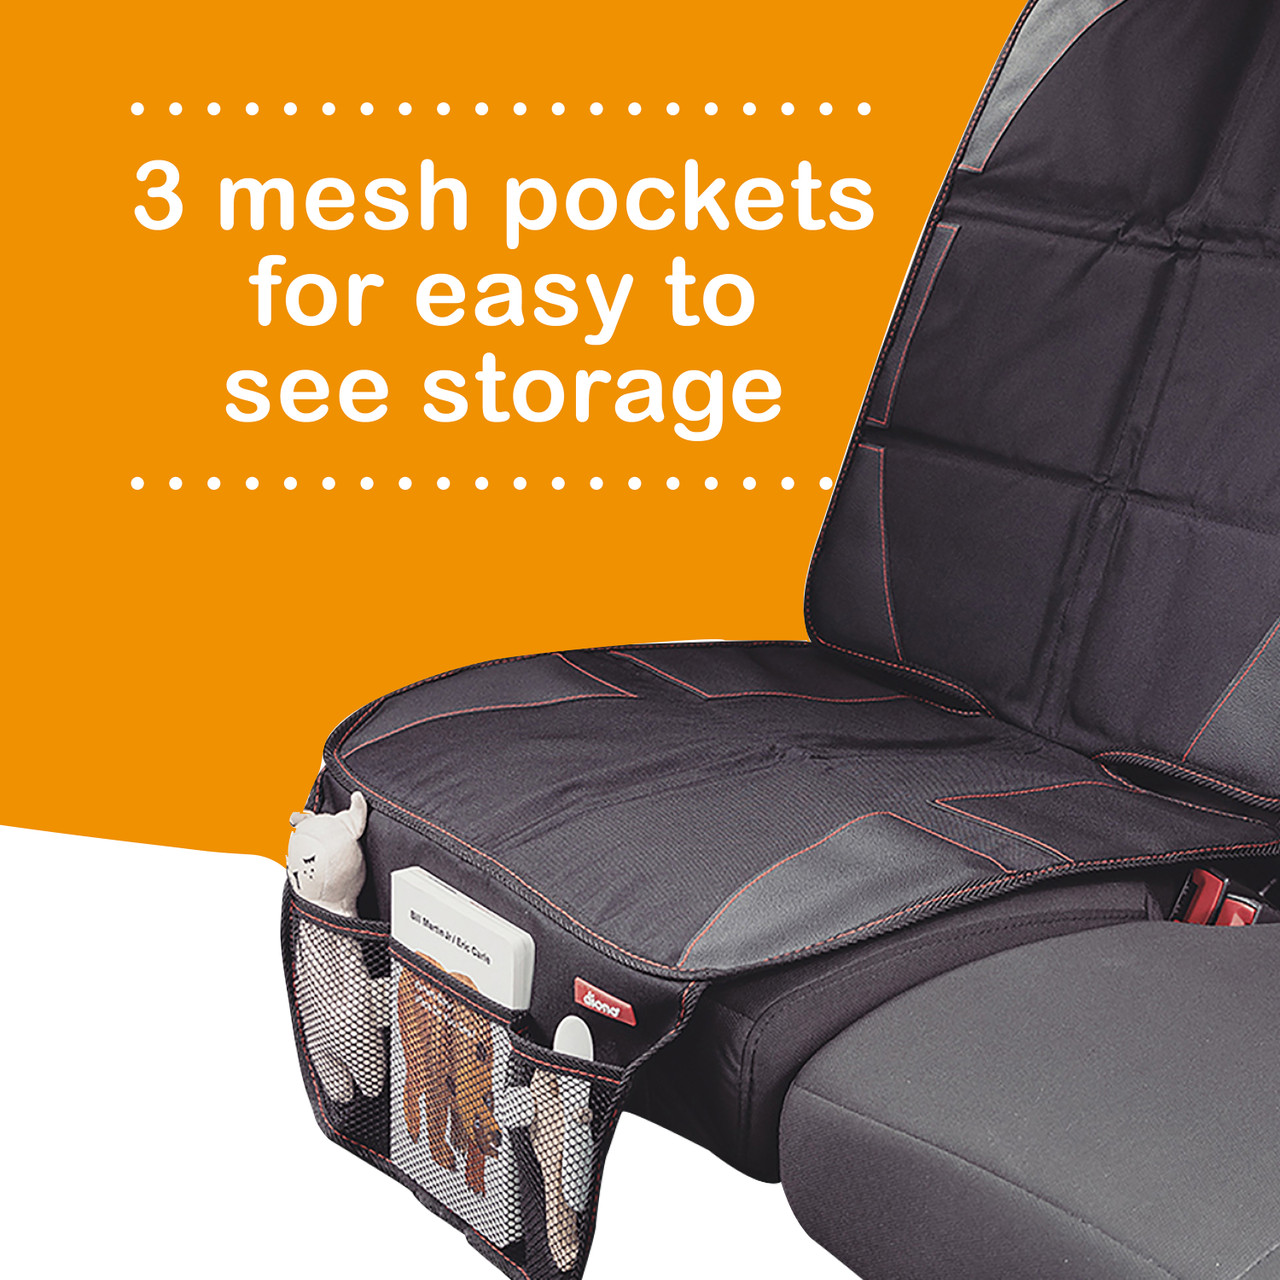 Super Mat® Seat Cover  diono® Car Seats & Travel Accessories